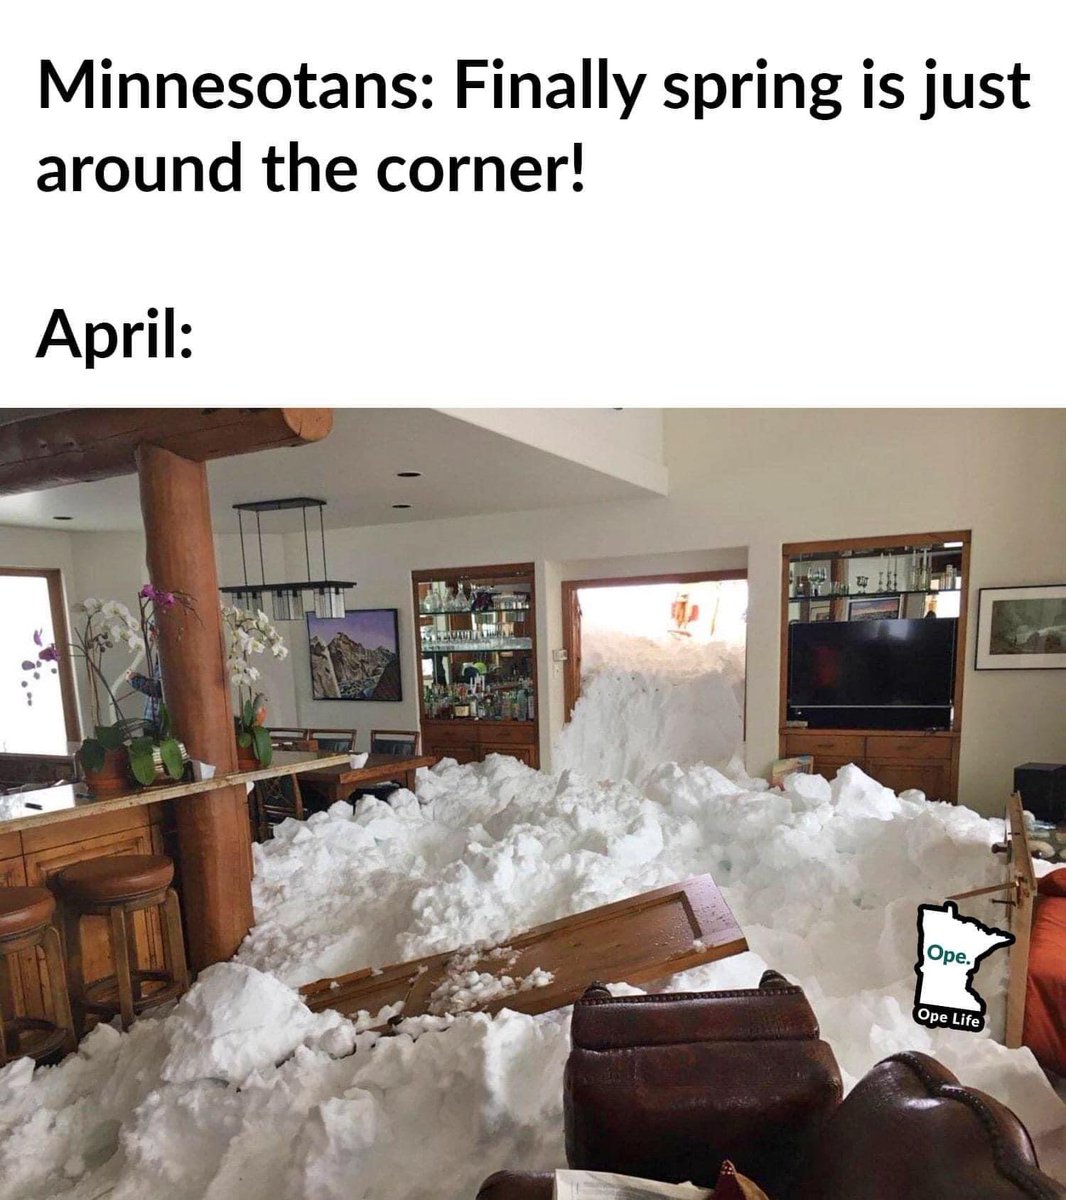 Let’s hope we can get through April without a major storm, right @pdouglasweather @svensundgaard ?! #Minnesota #Weather https://t.co/X0hmxCECLz